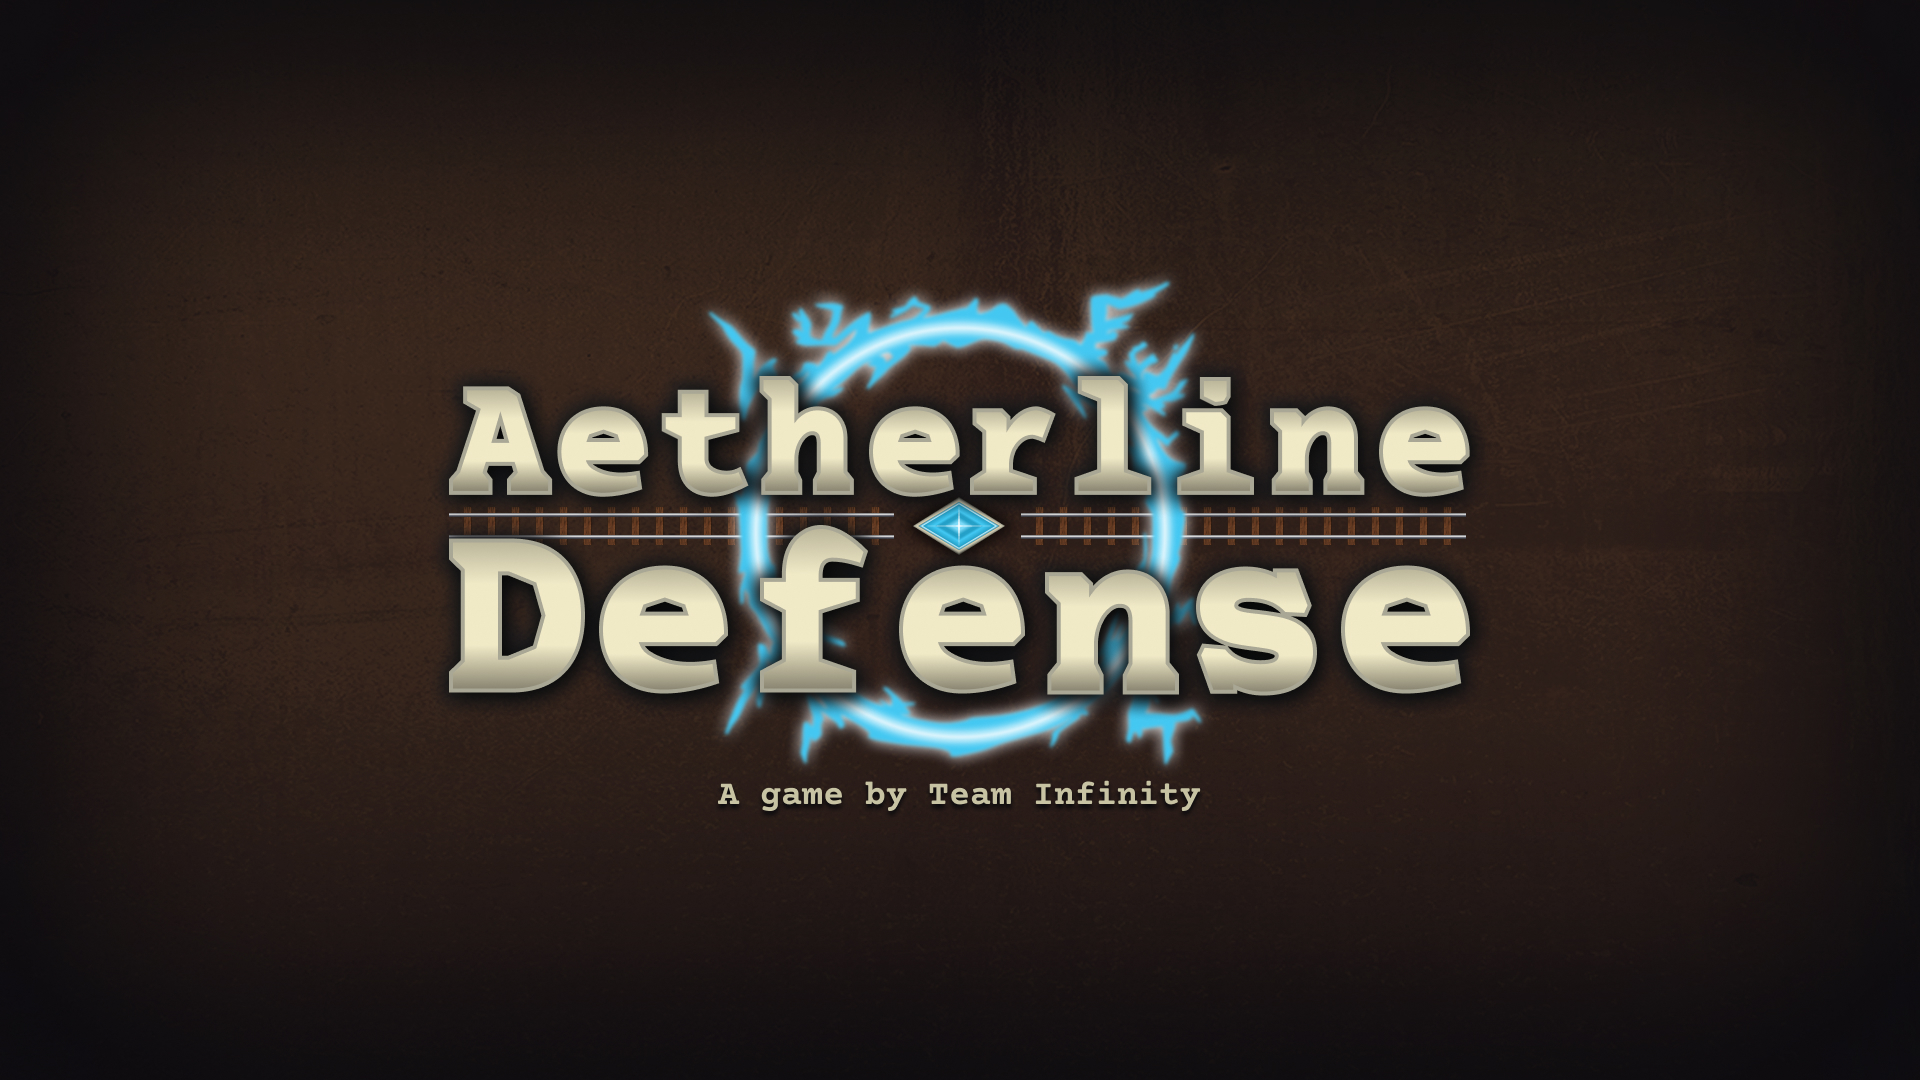 Aetherline Defense